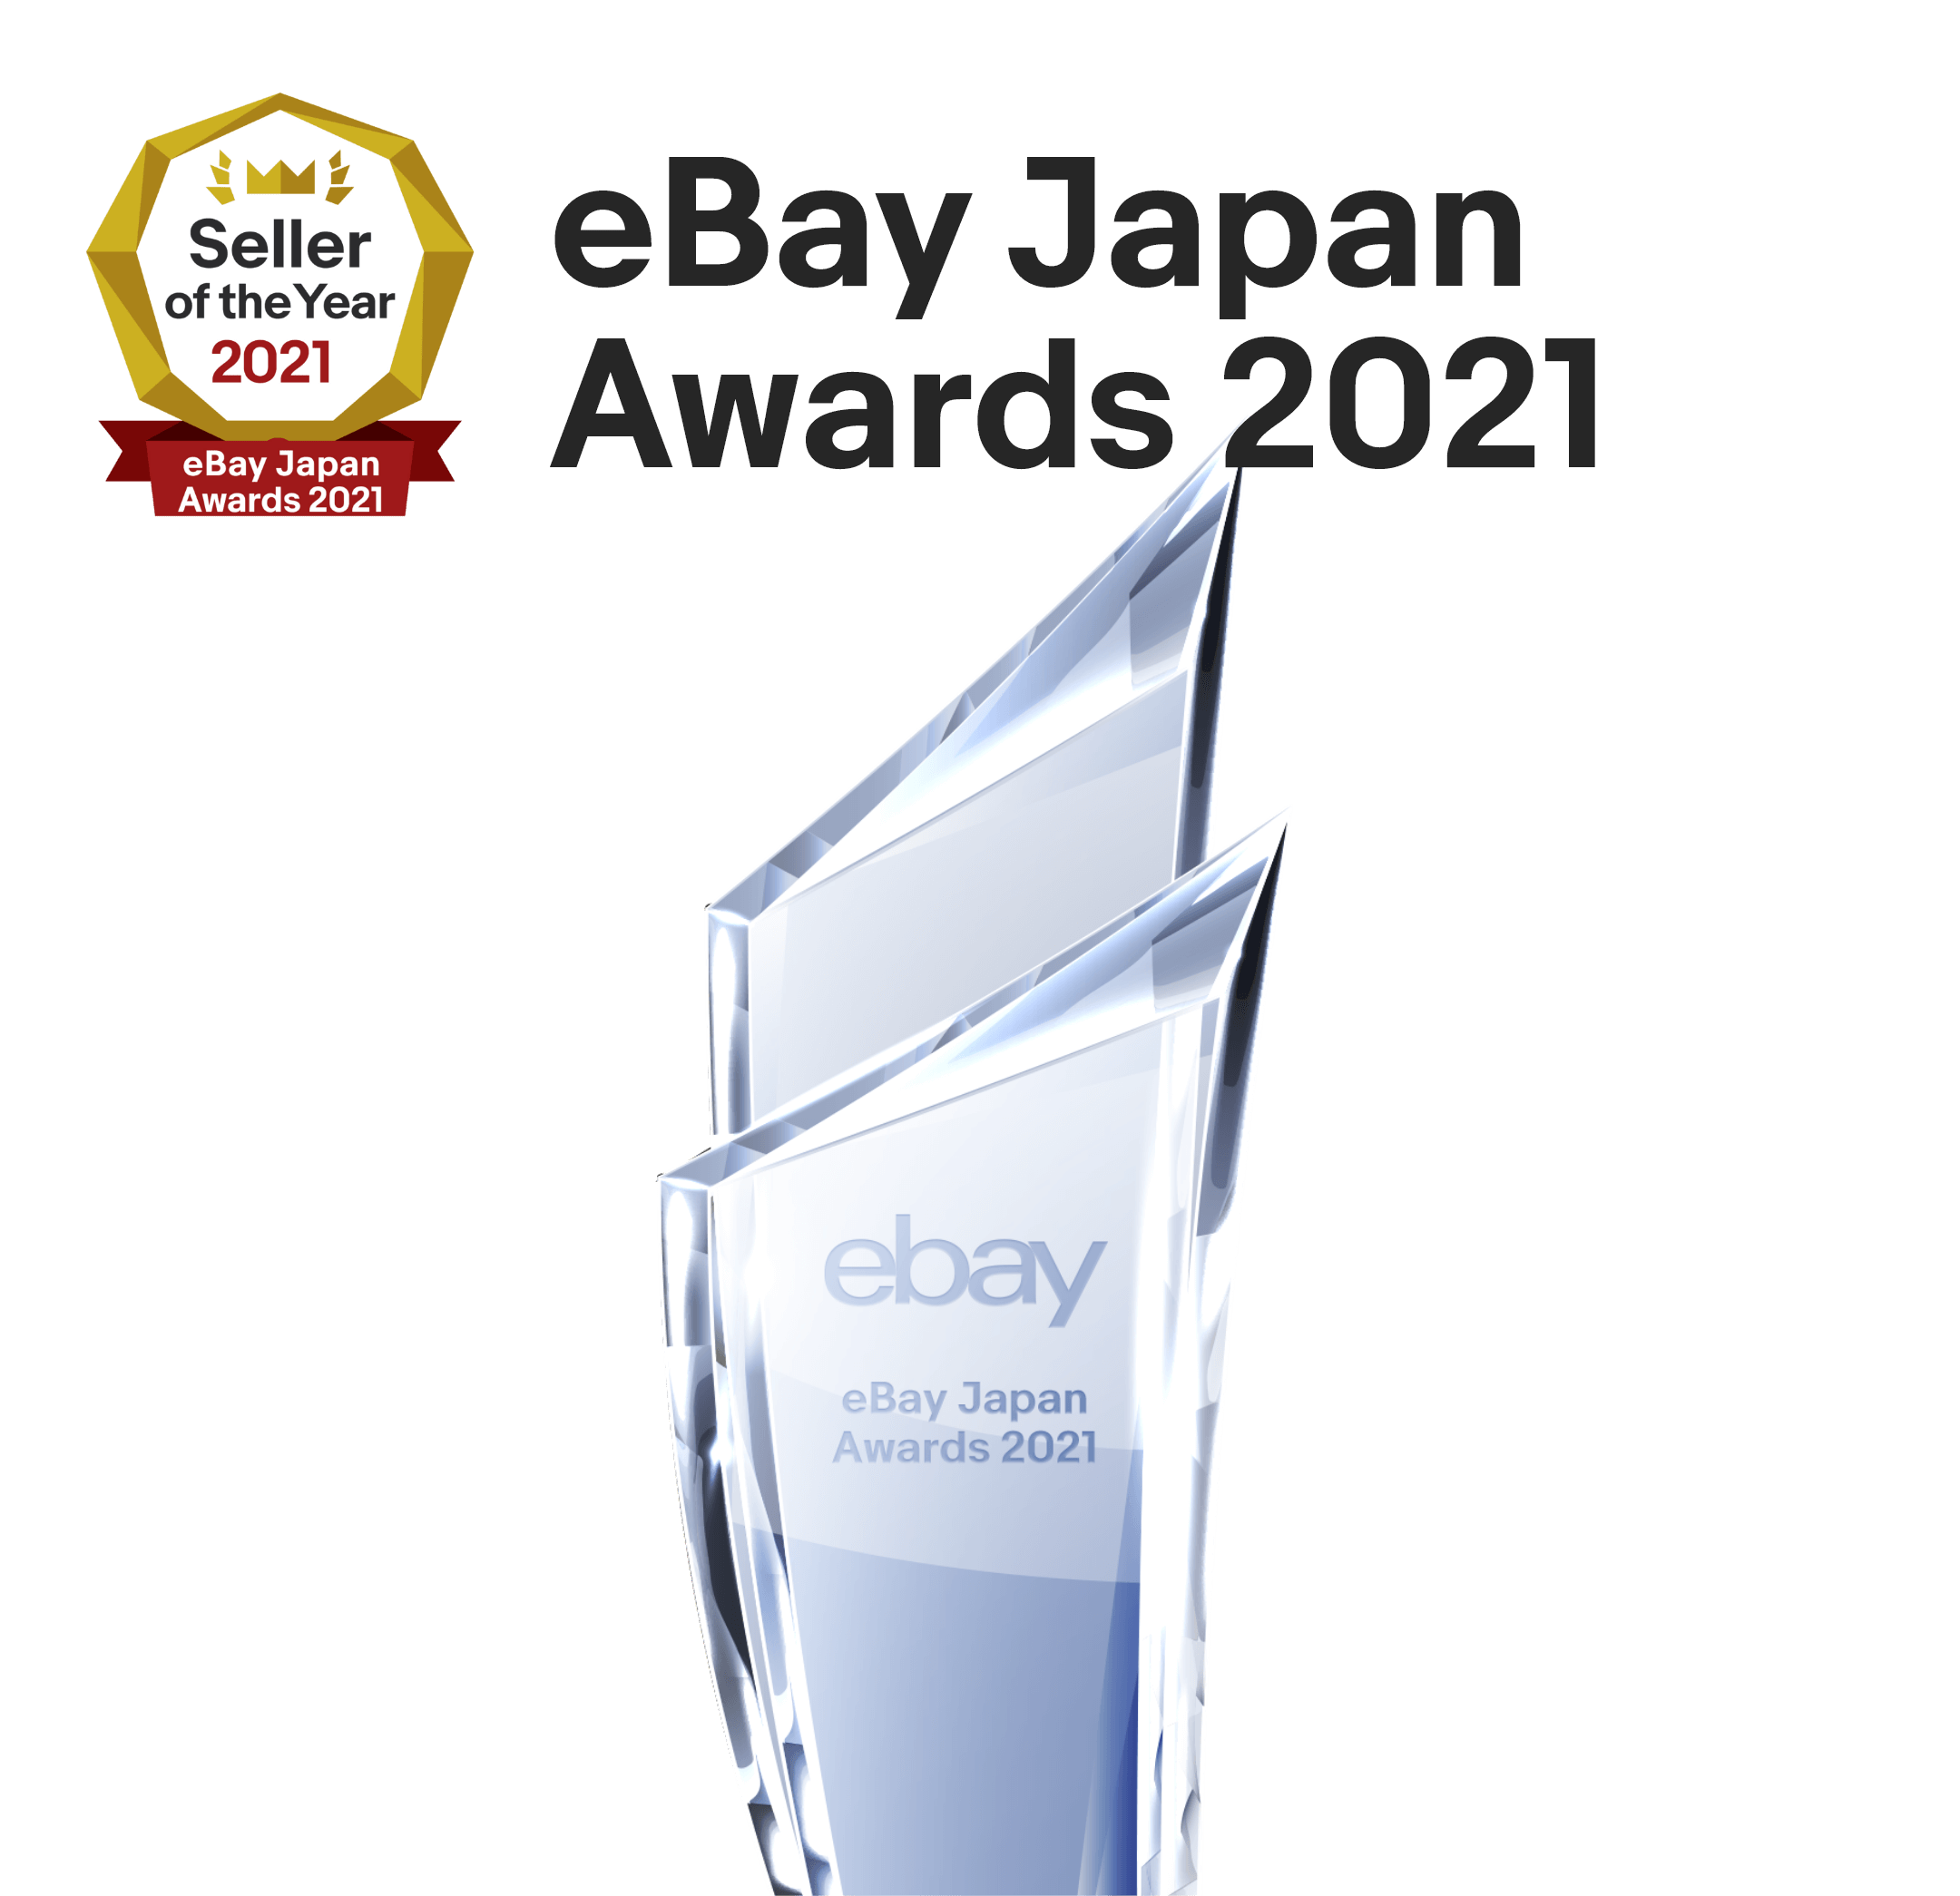 eBay Japan Awards 2021